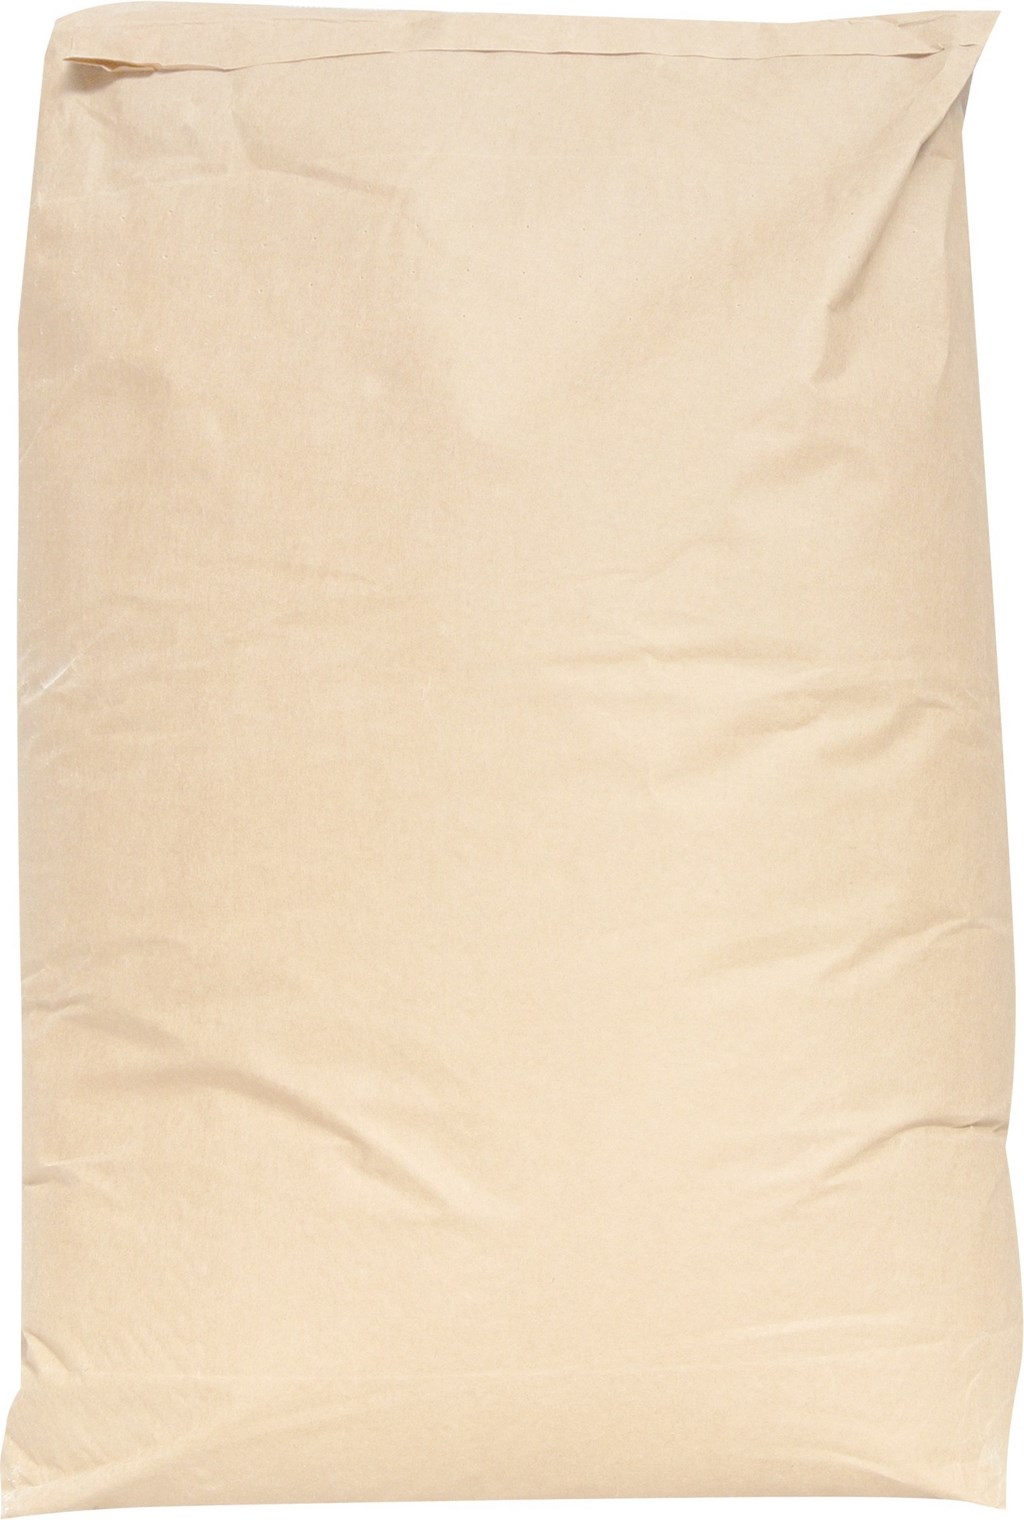 Wheat Flour Domsons Diamond 25 kg